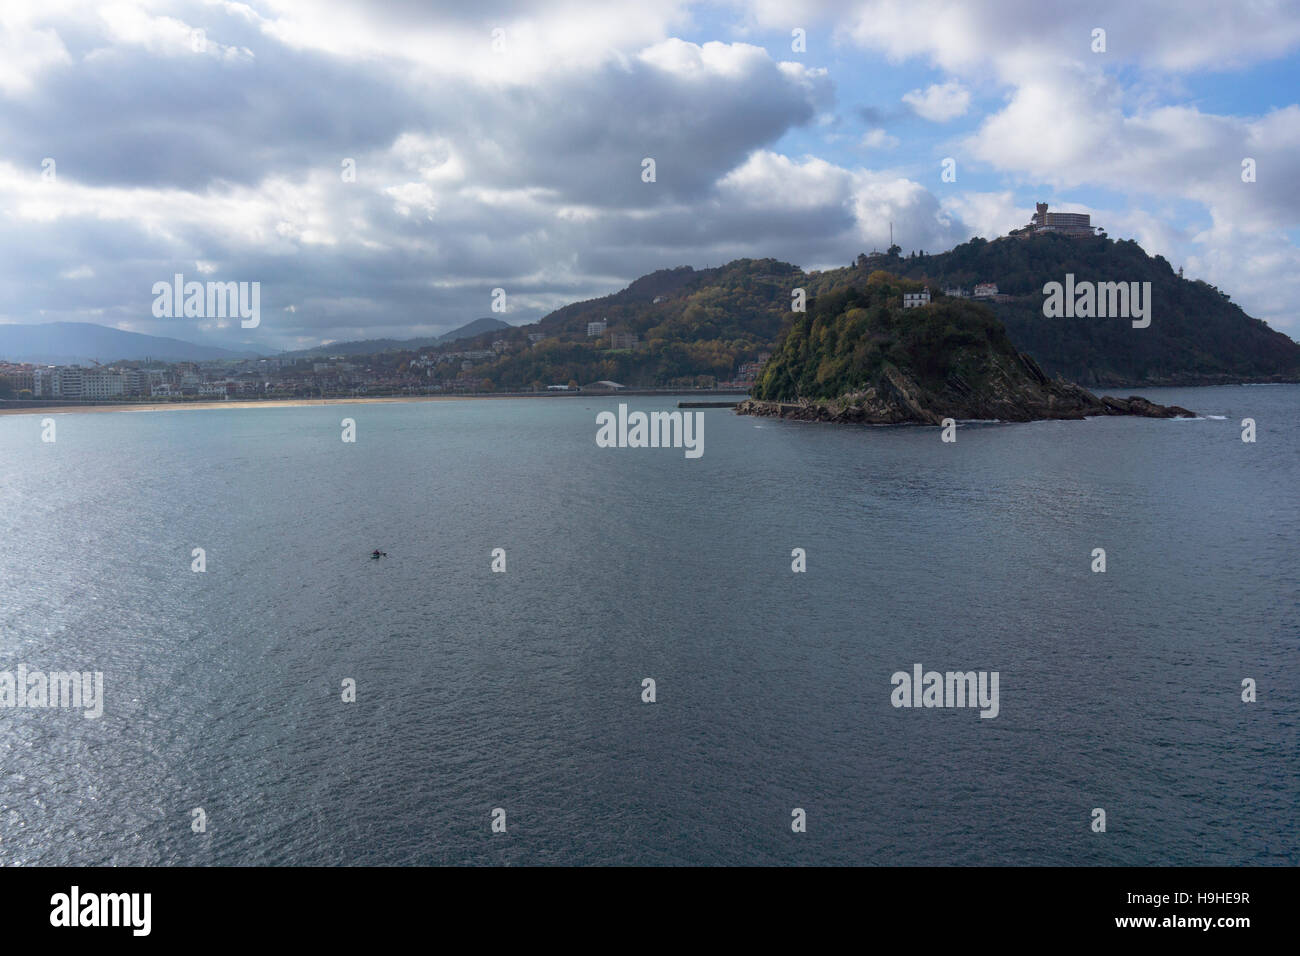 Looking towards Isla Santa Clare in San Sebastián Stock Photo